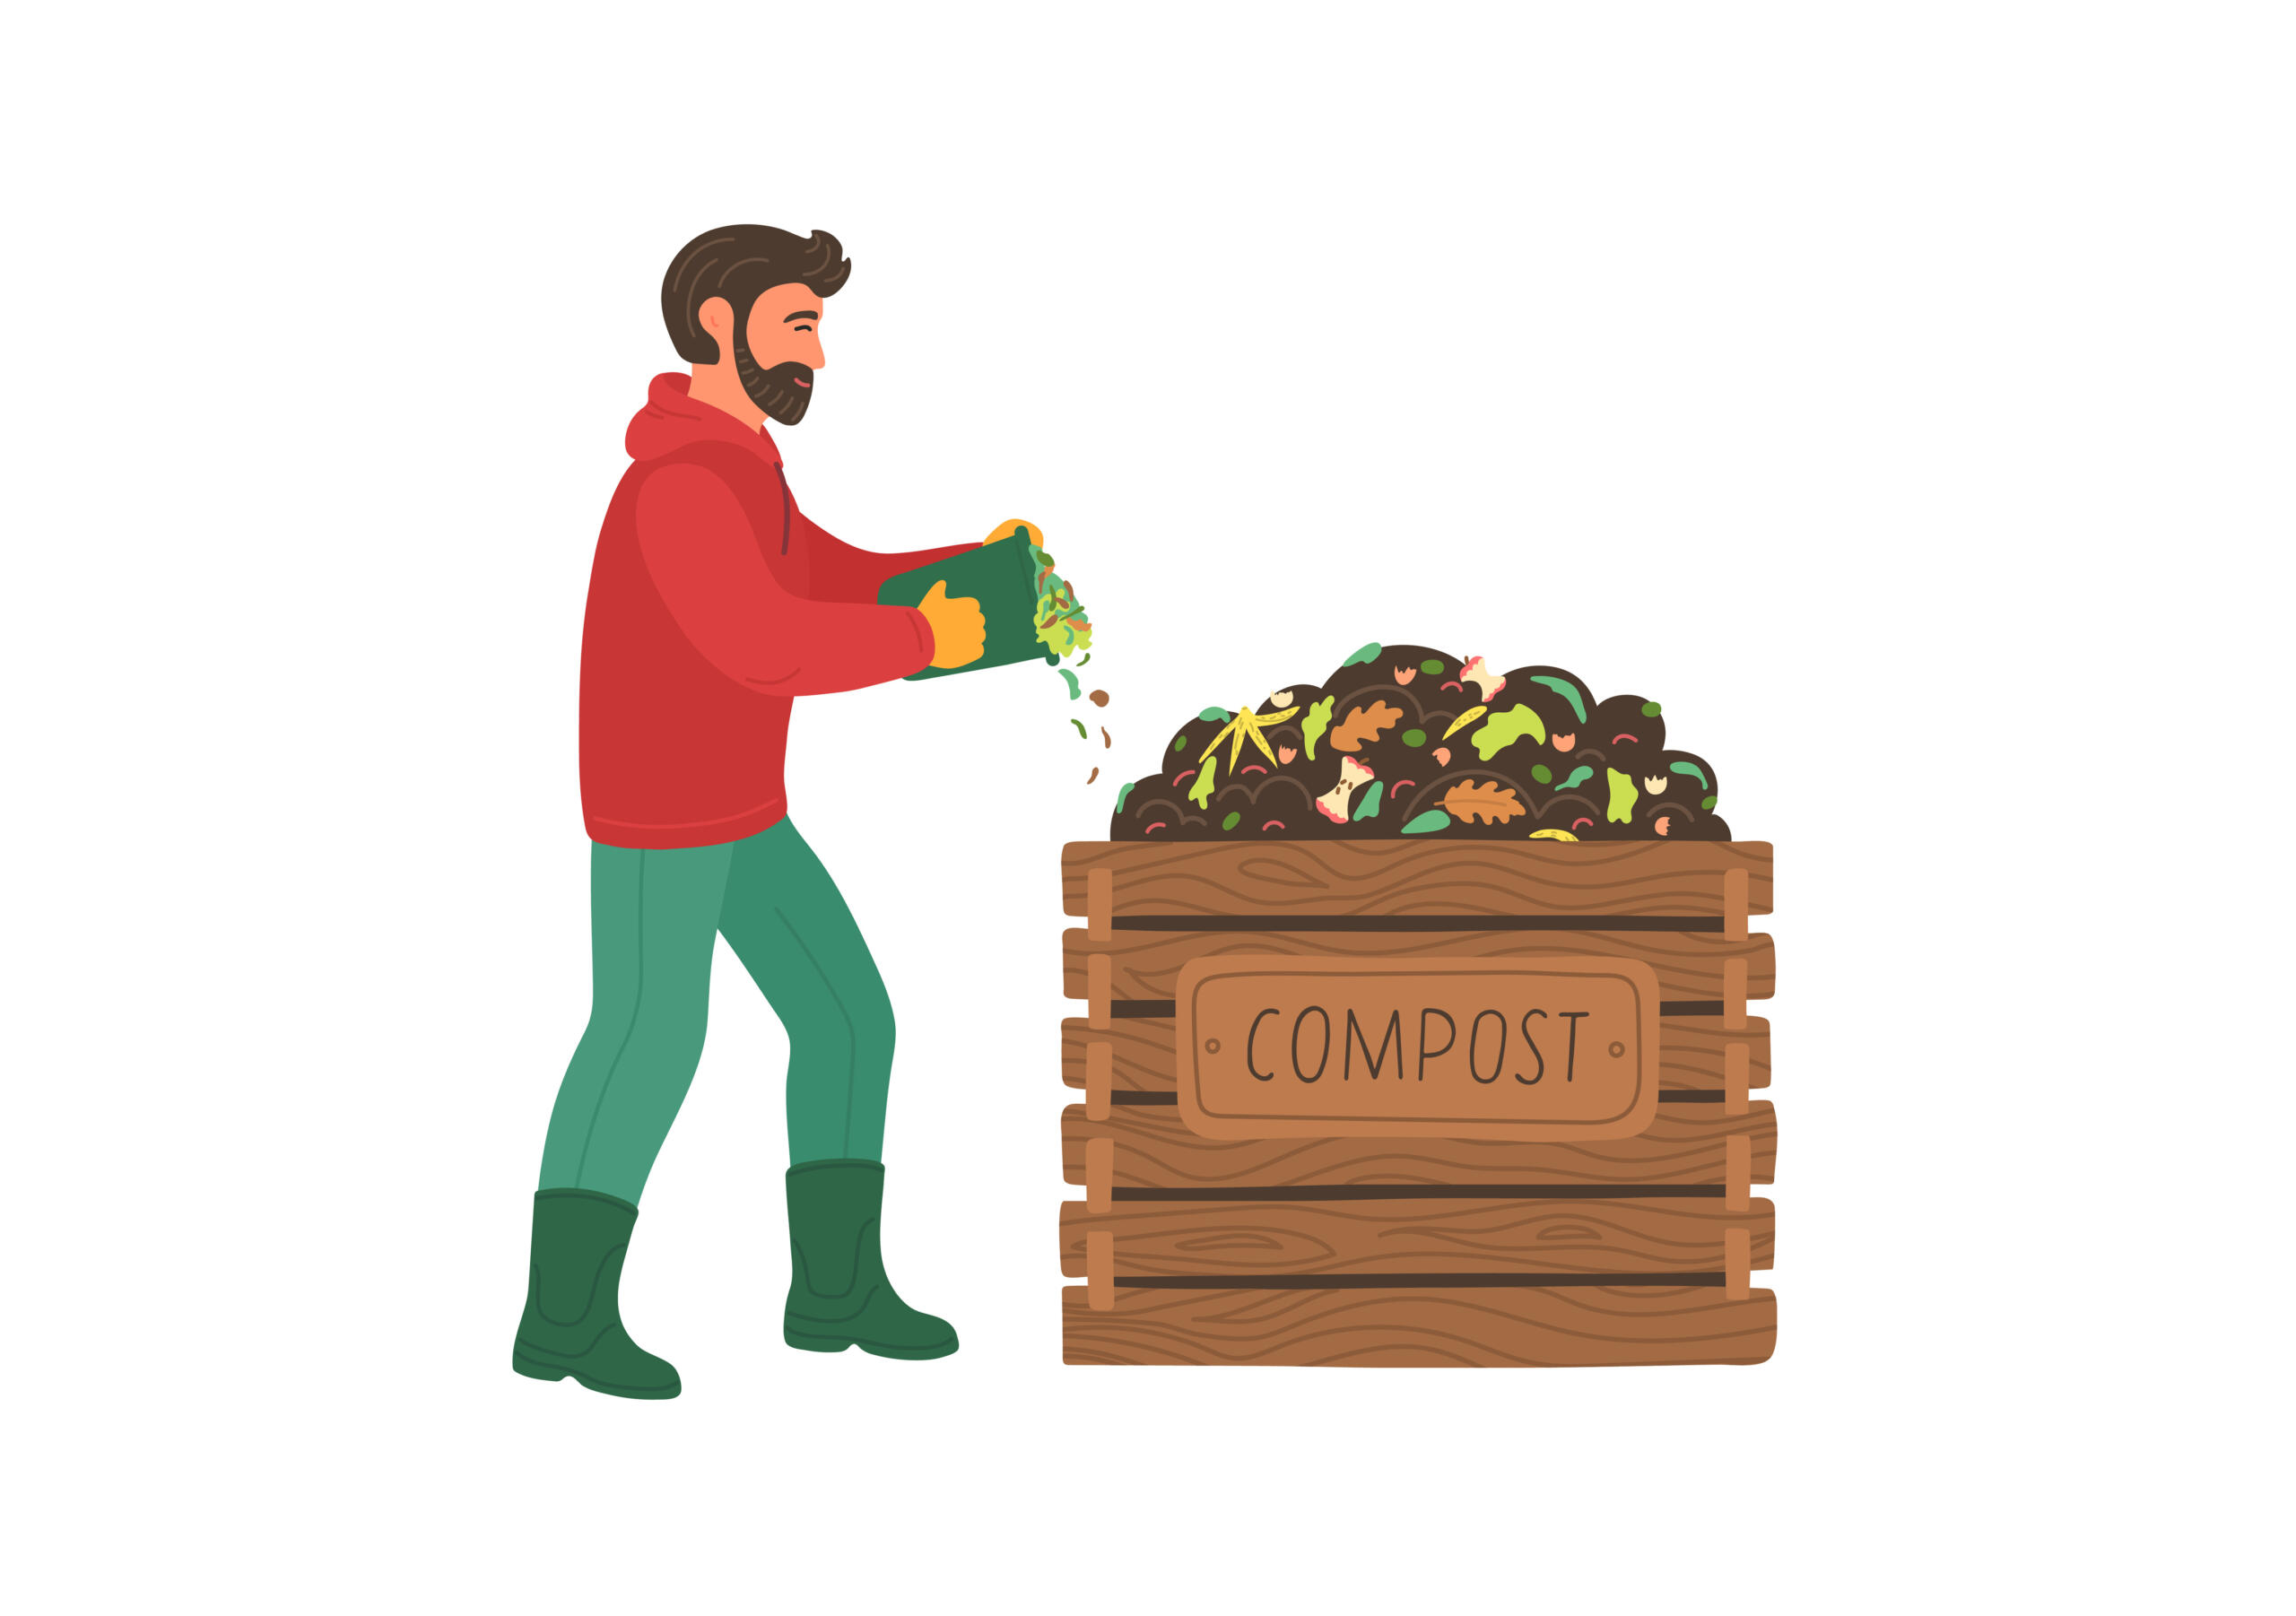 Kompost